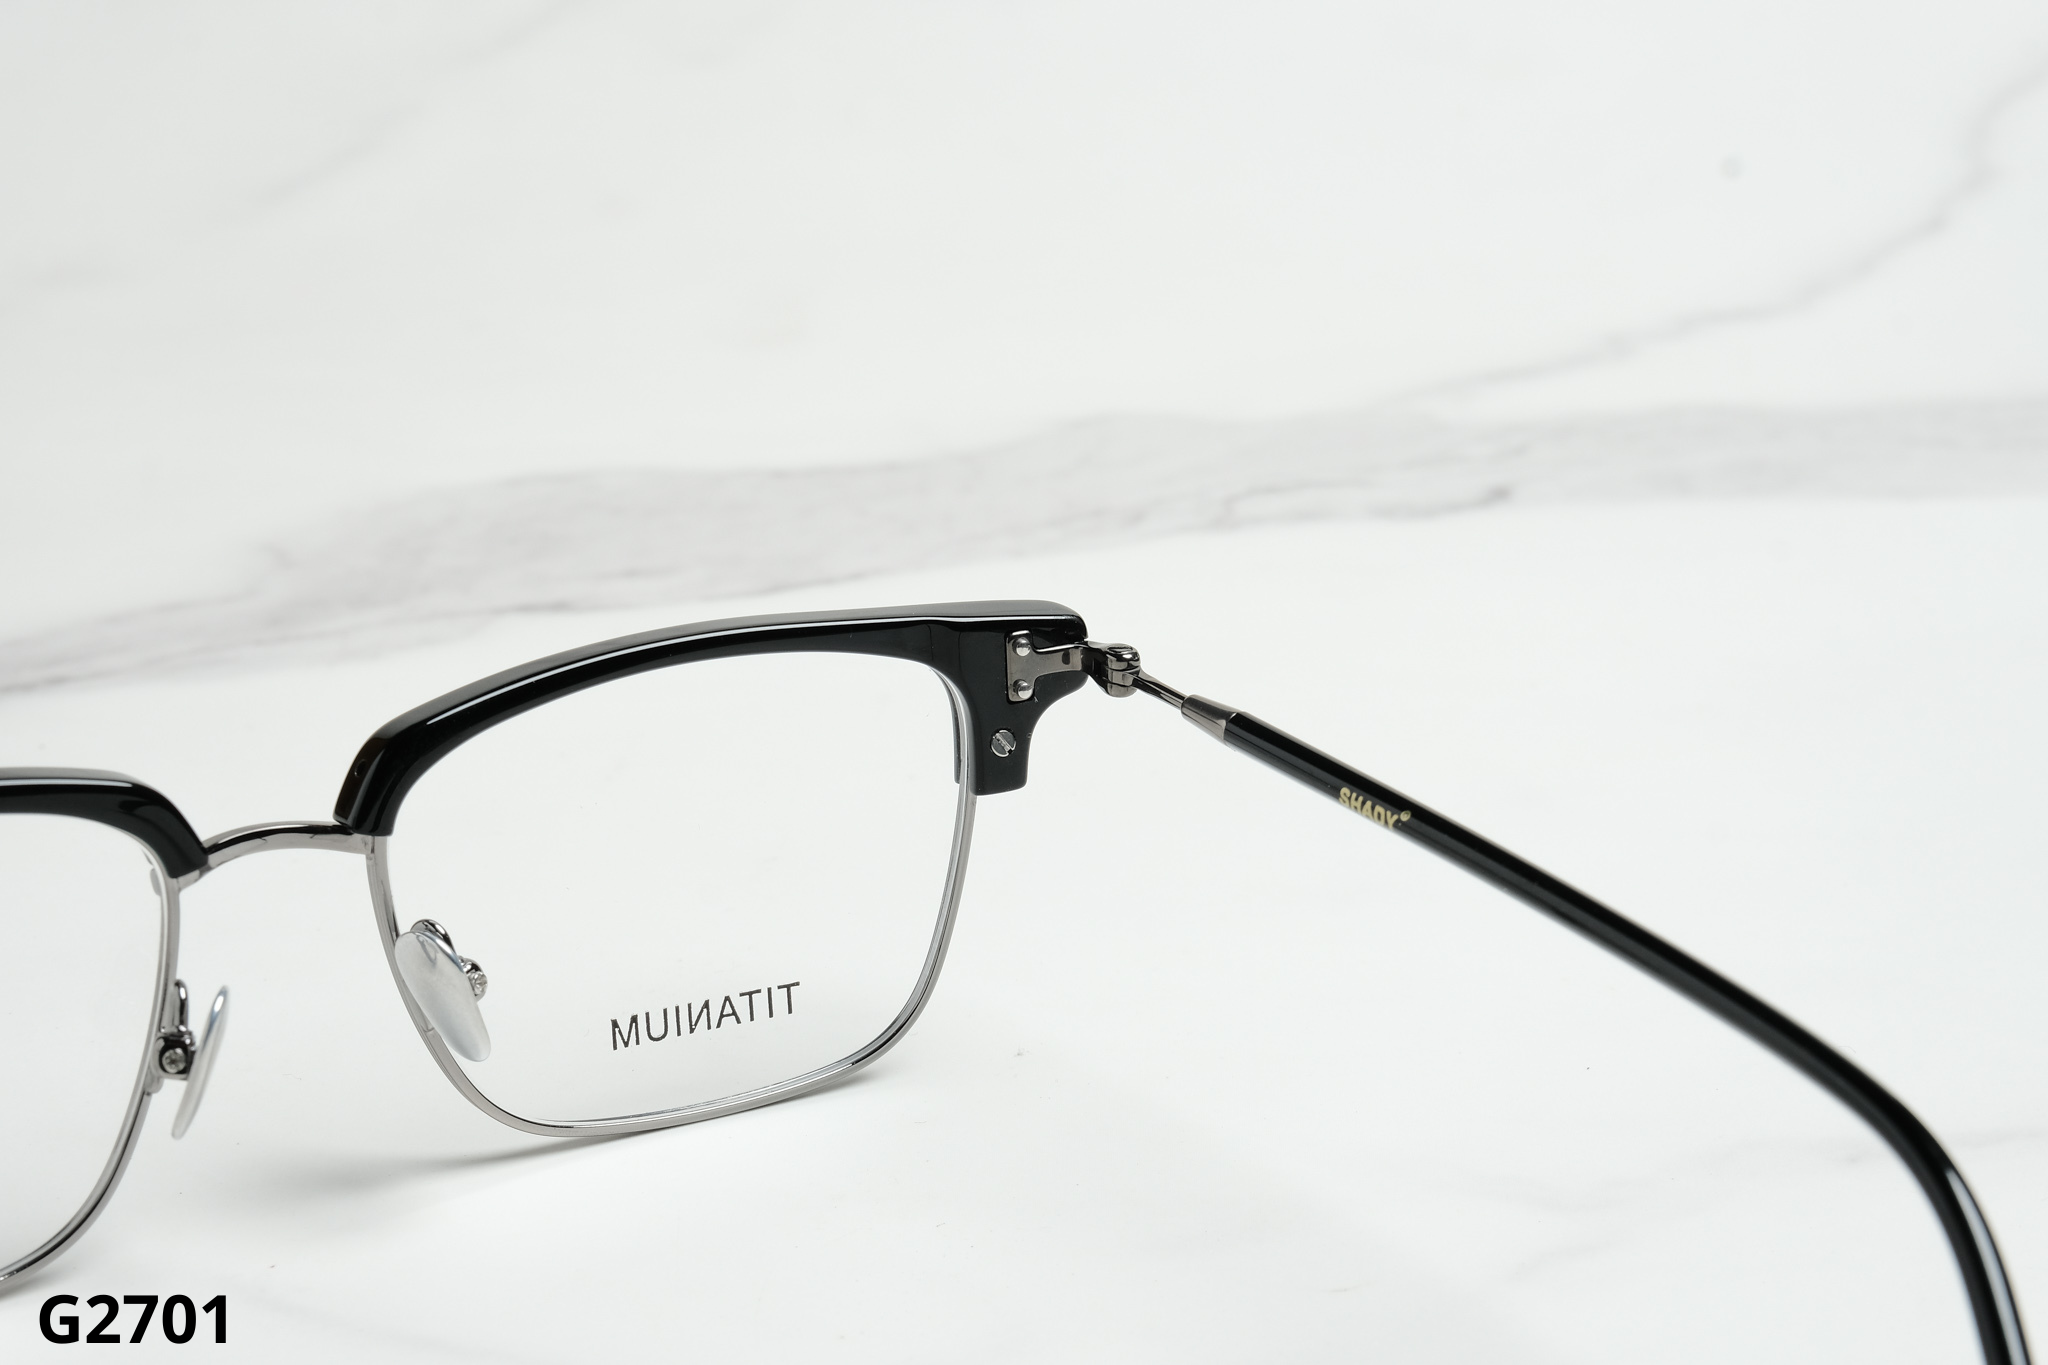  SHADY Eyewear - Glasses - G2701 